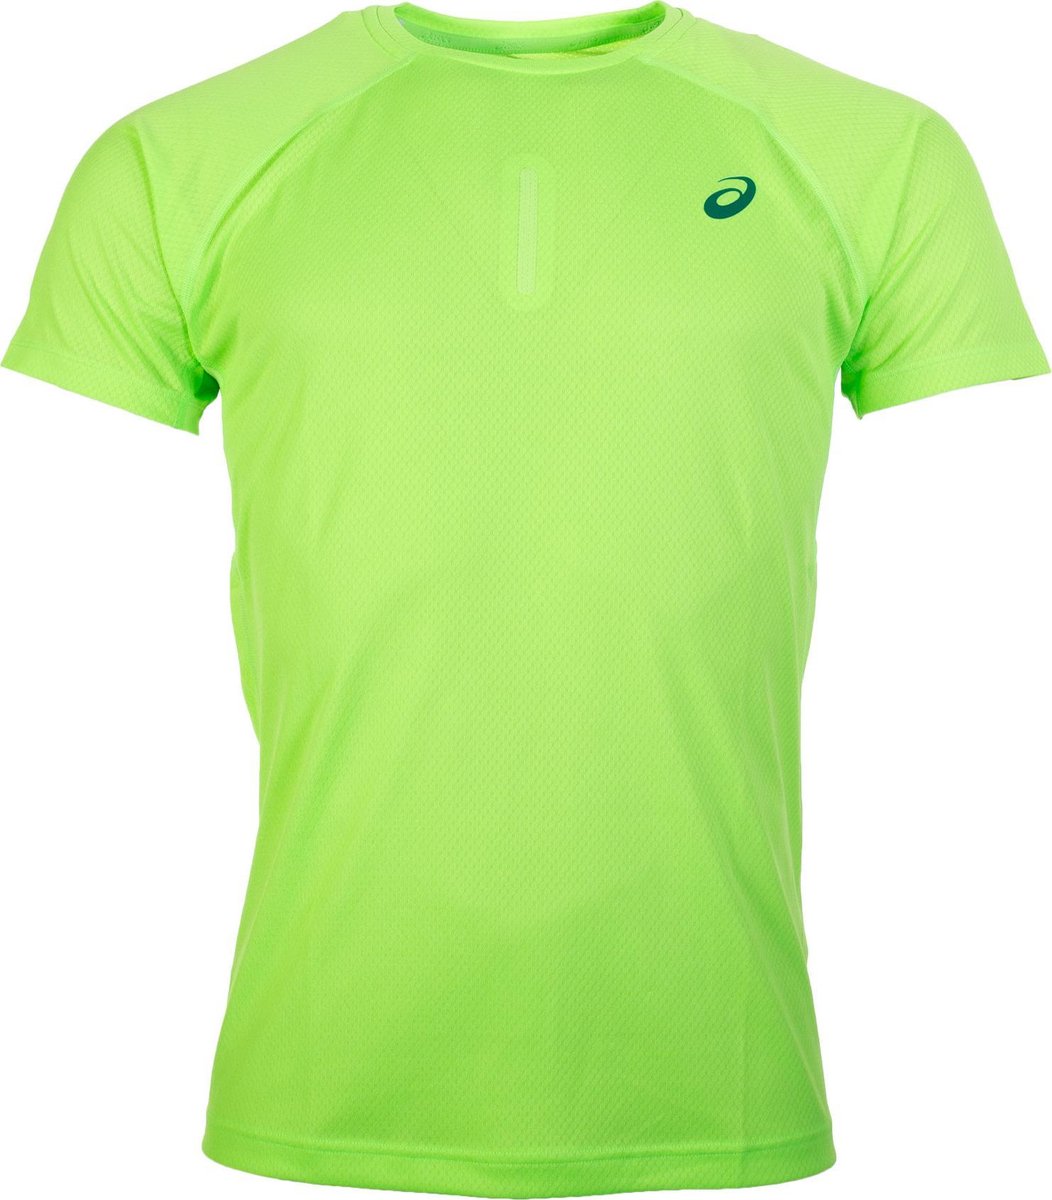 zo veel hoek Ringlet Asics SS Running T-shirt Heren Sportshirt - Maat L - Mannen - groen |  bol.com